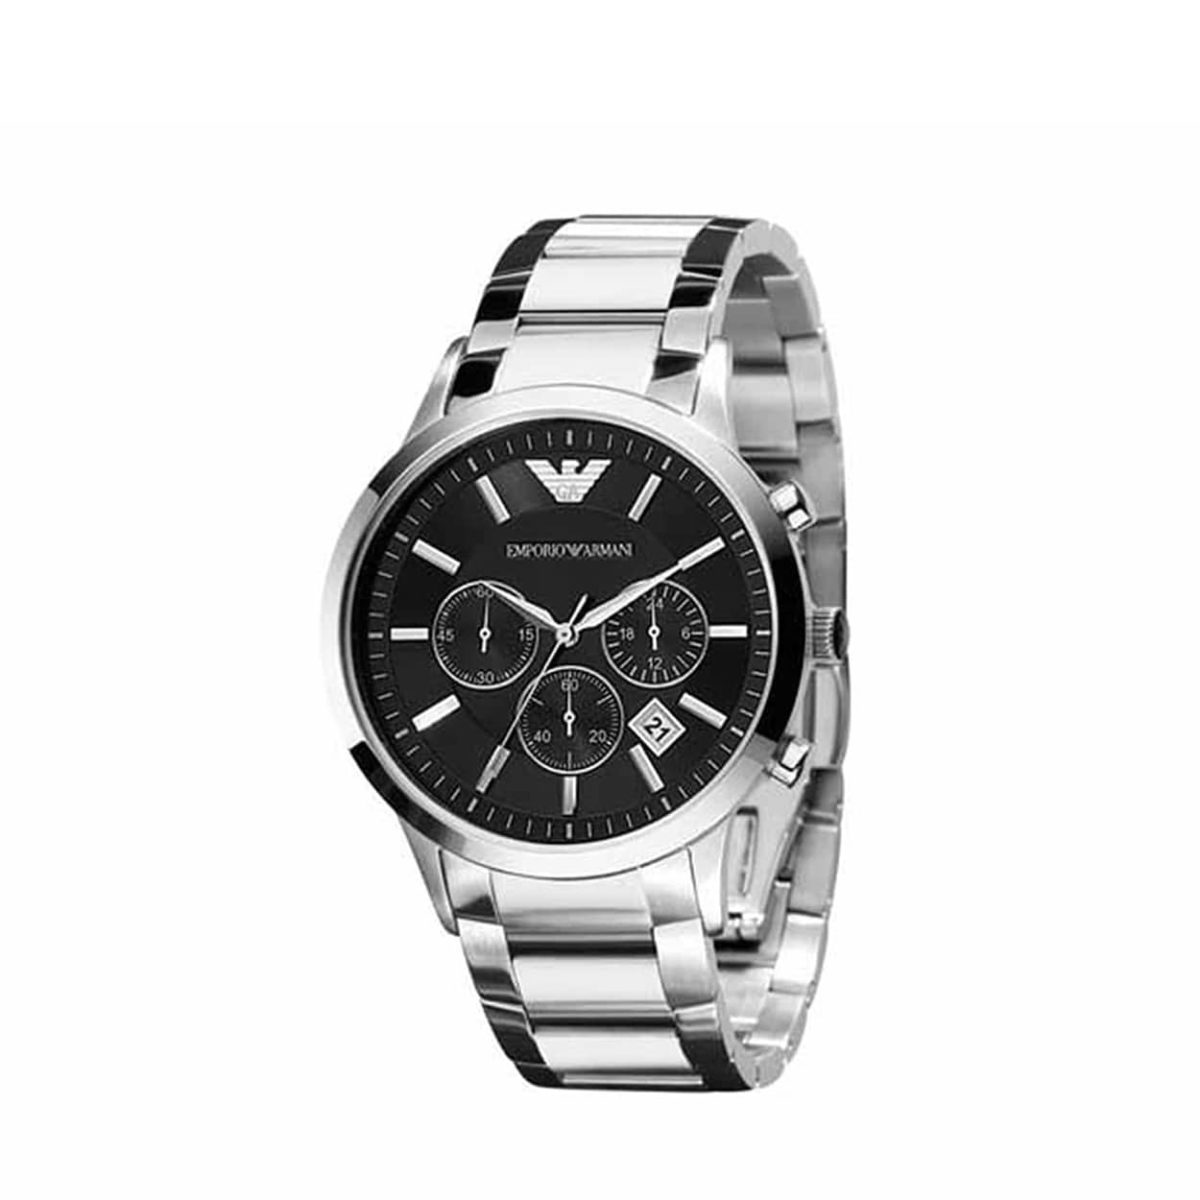 Emporio Armani Dress Stainless Chronograph Men's Watch - AR2434